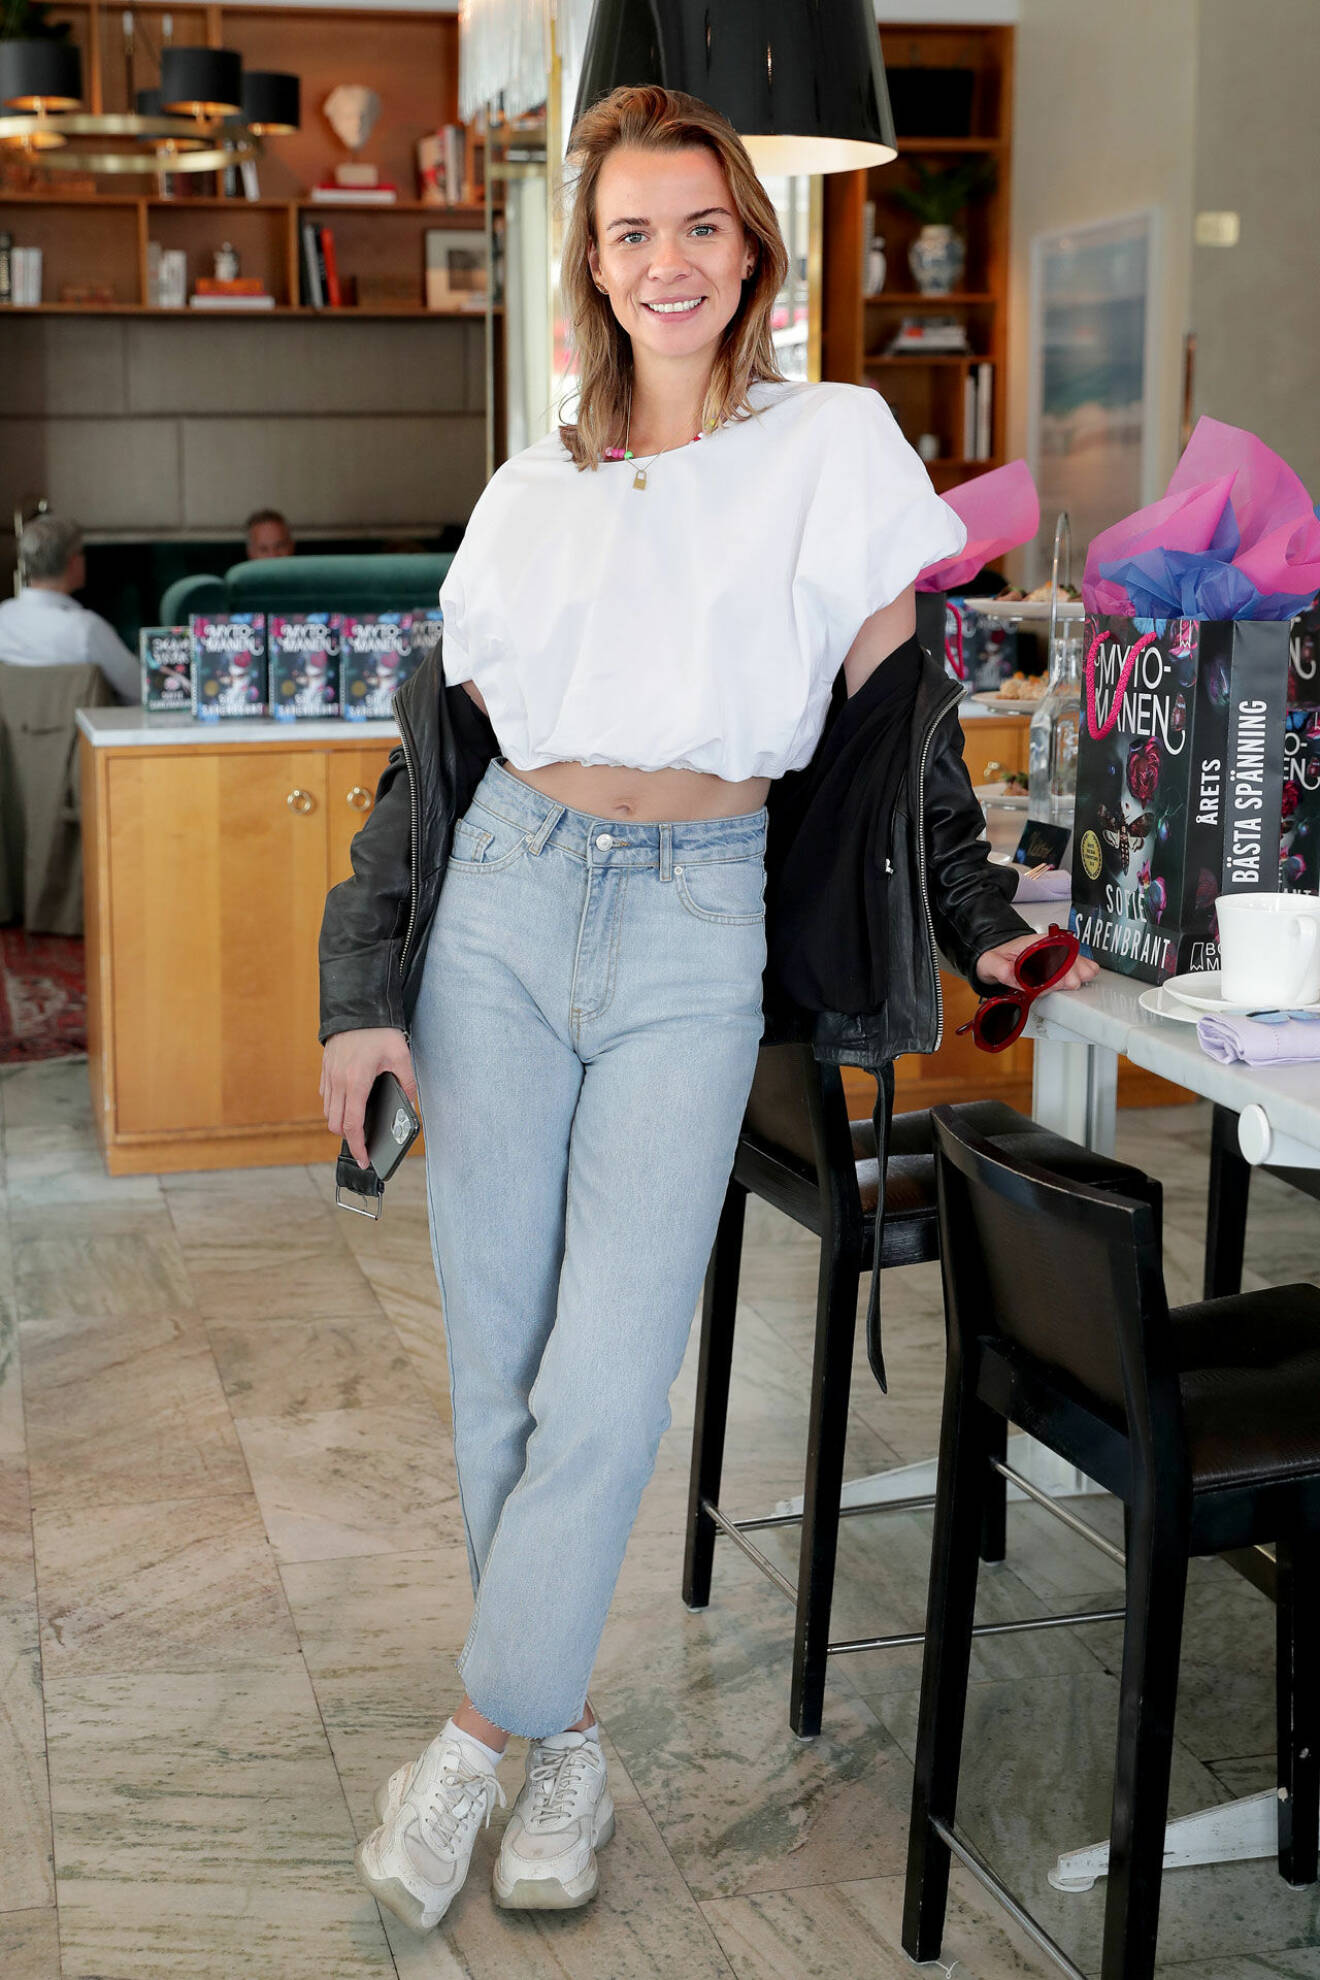 Influencern Margaux Dietz i avslappnad sommarstil  à la jeans  och vit blus.